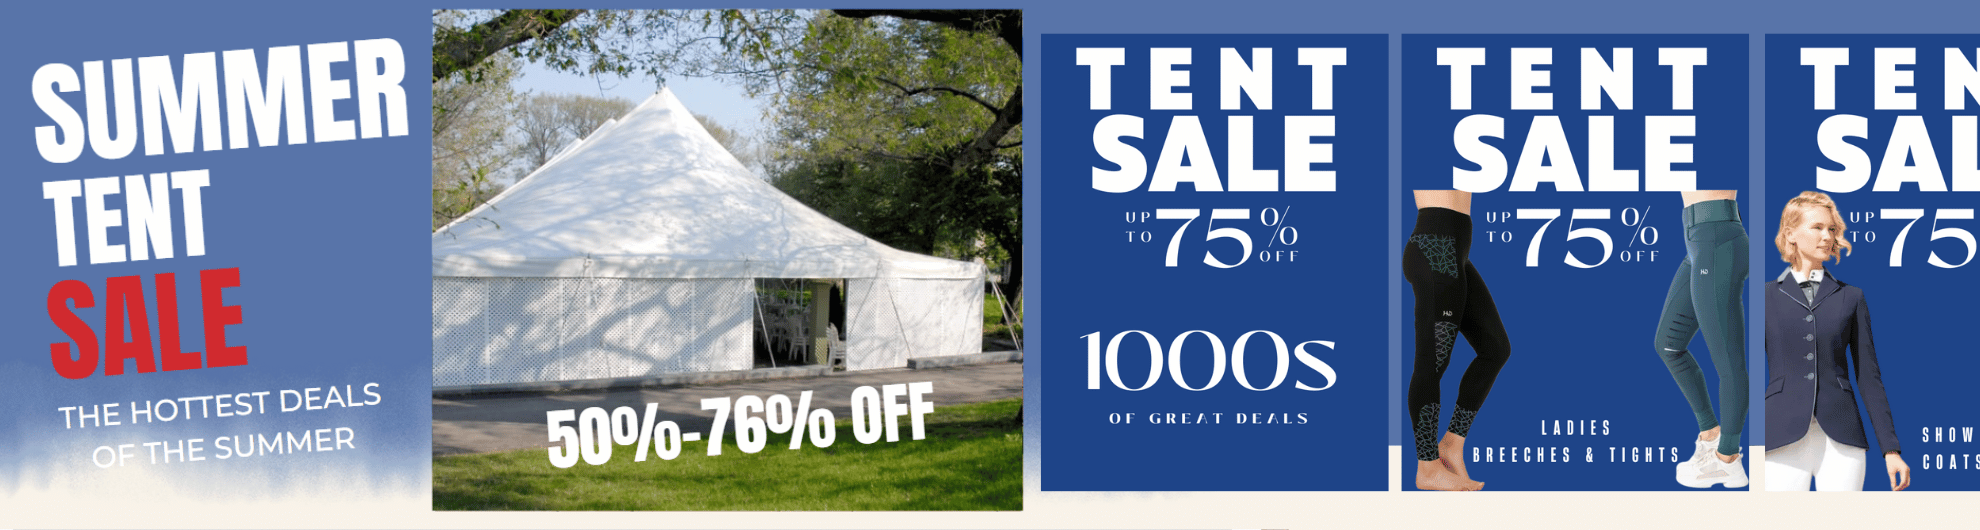 Summer Tent Sale